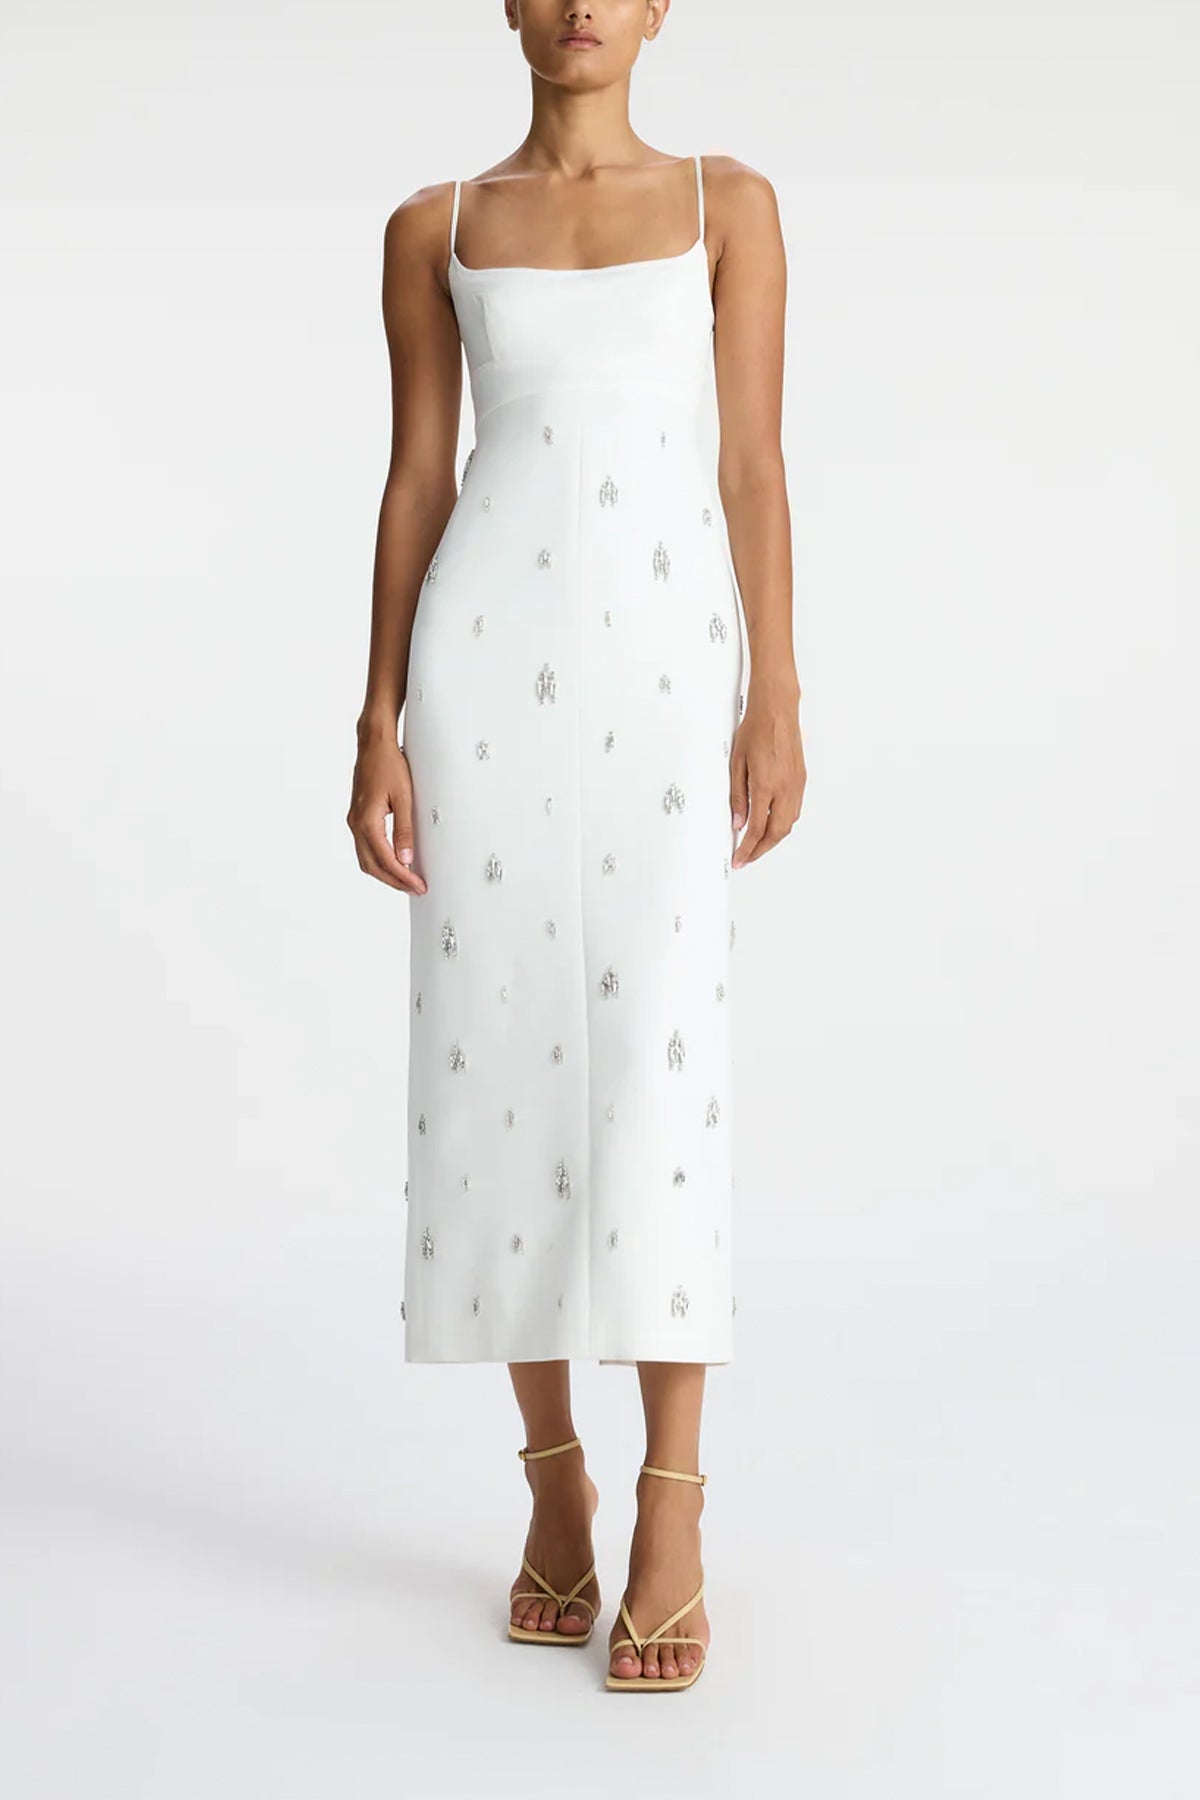 Alana Embellished Midi Dress in White - shop-olivia.com